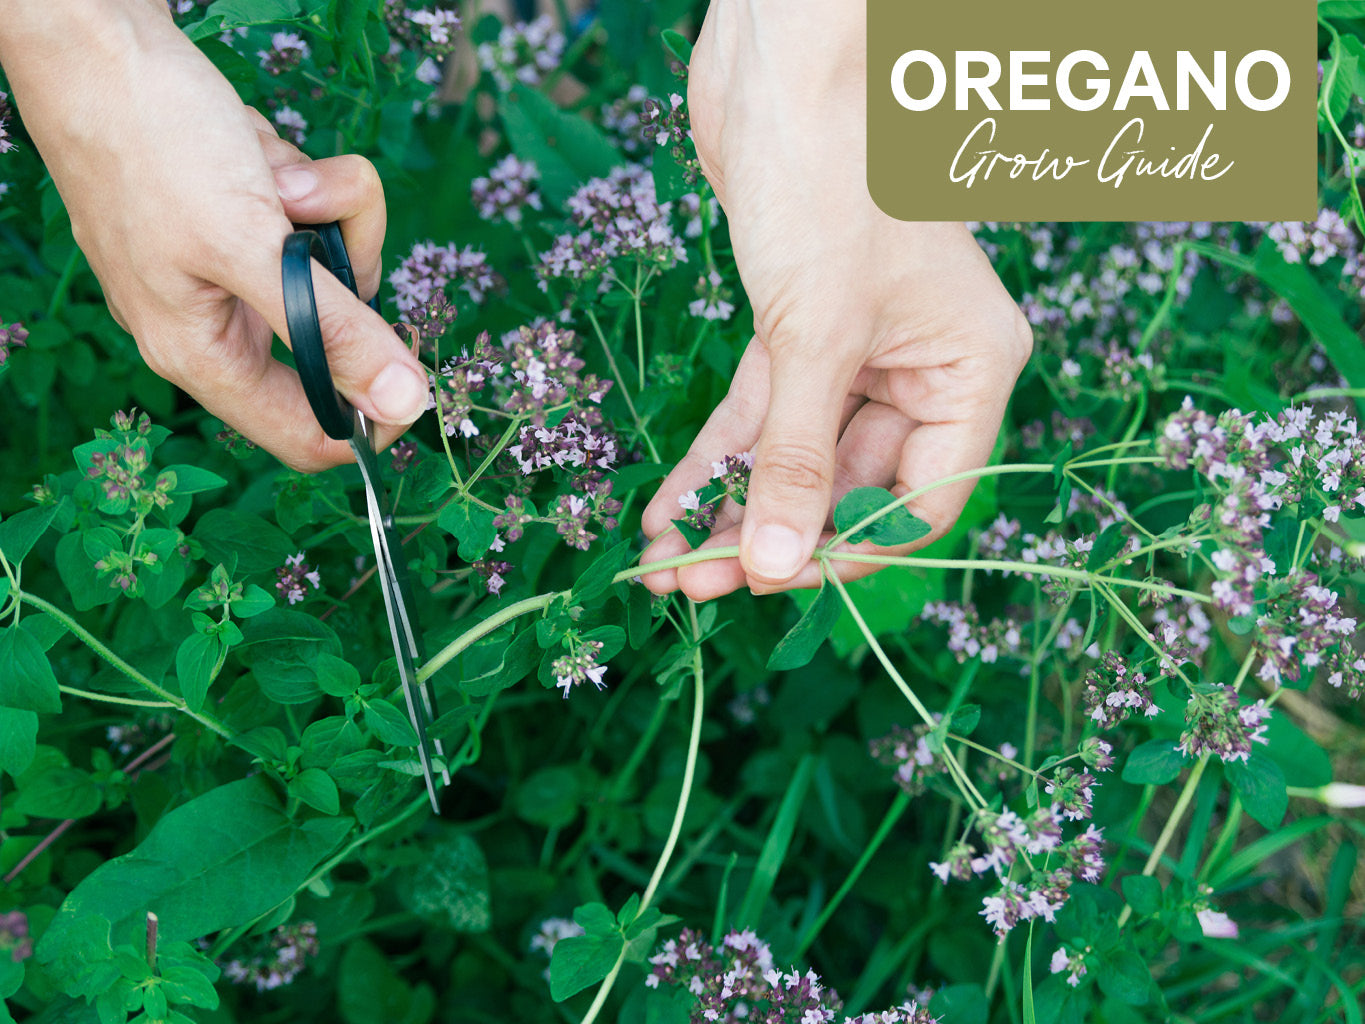 Oregano Grow Guide: How to Plant, Grow and Harvest Oregano